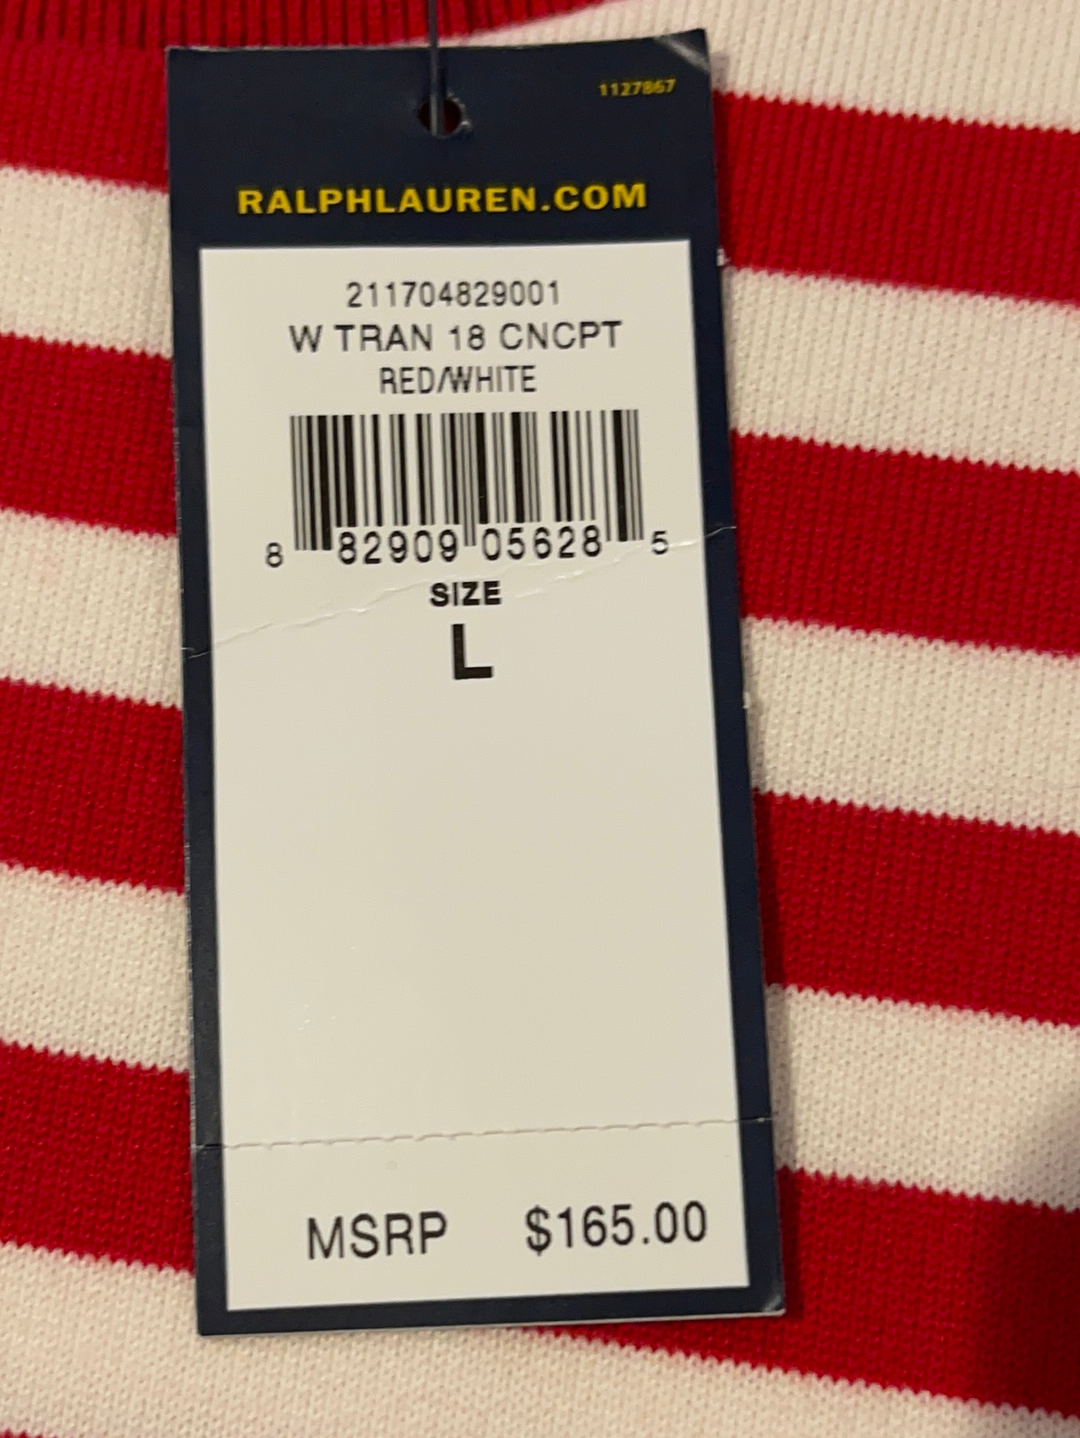 Polo Ralph Lauren Cotton Striped Dress